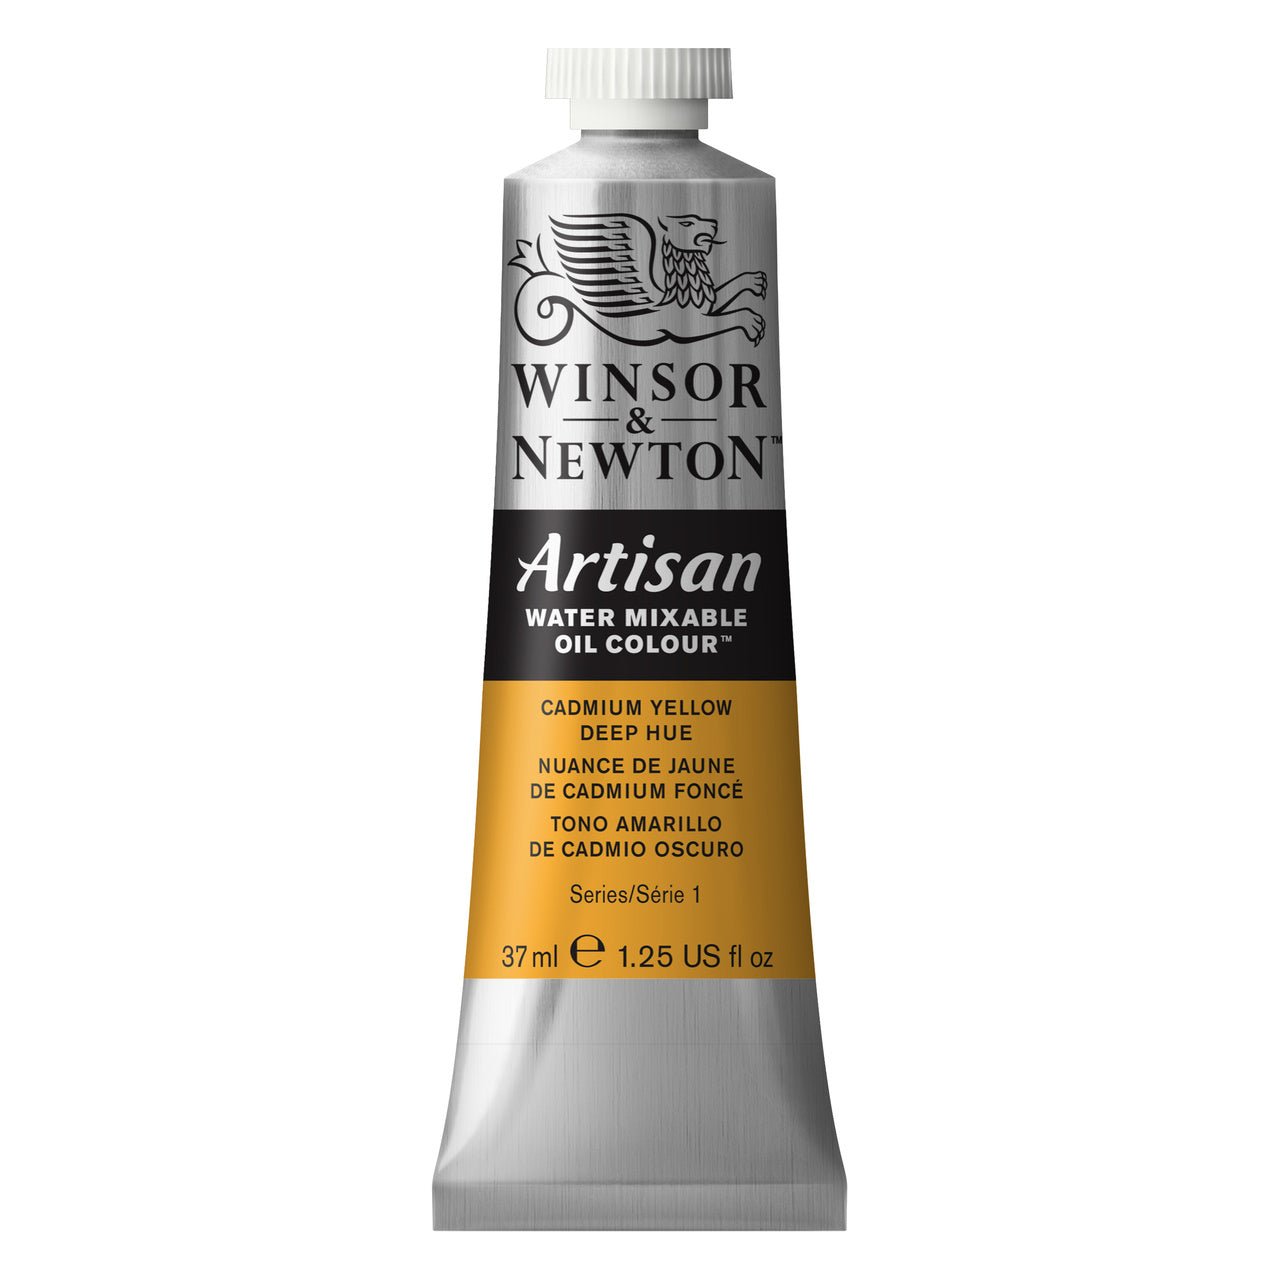 Winsor & Newton Artisan Water Mixable Oil 37ml - Cadmium Yellow Deep Hue - merriartist.com